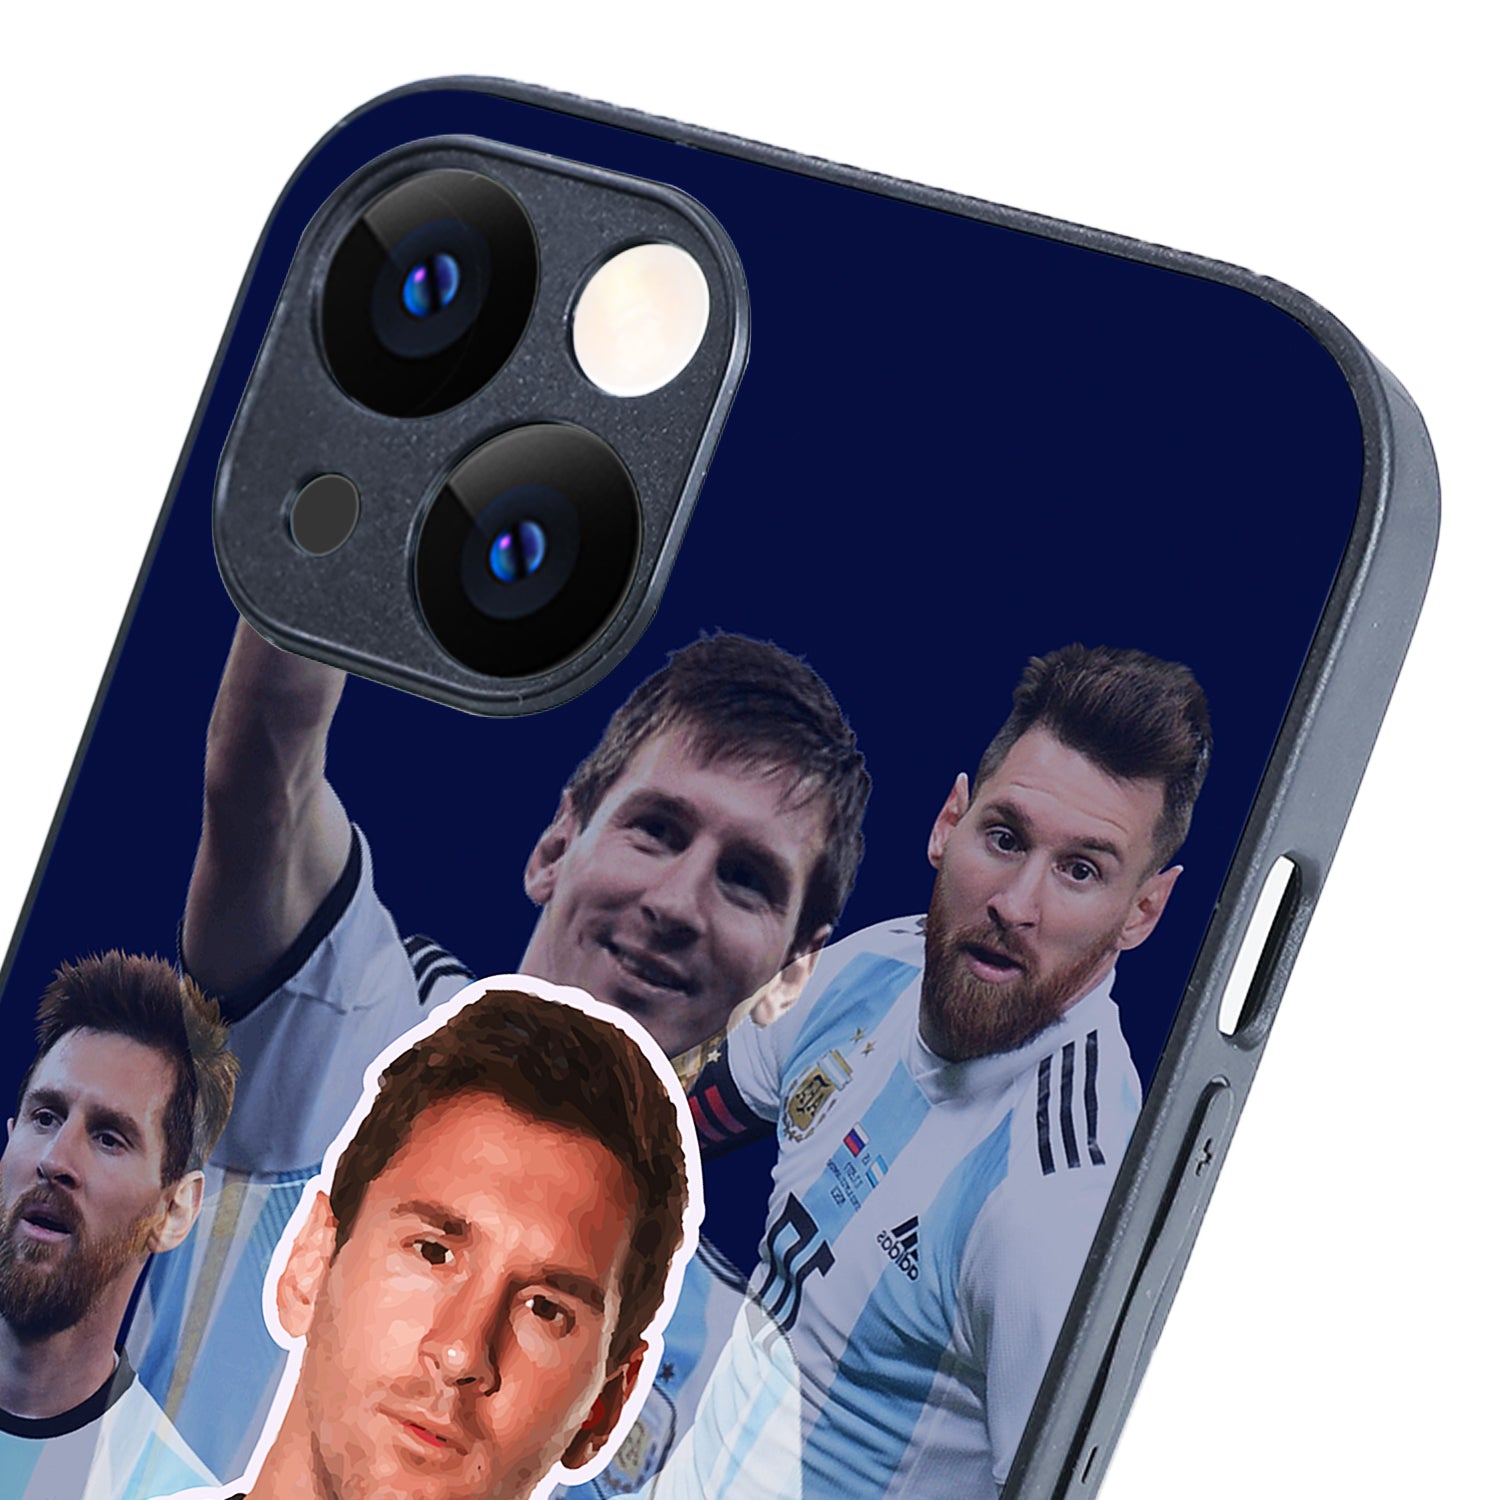 Messi Champion Sports iPhone 13 Case